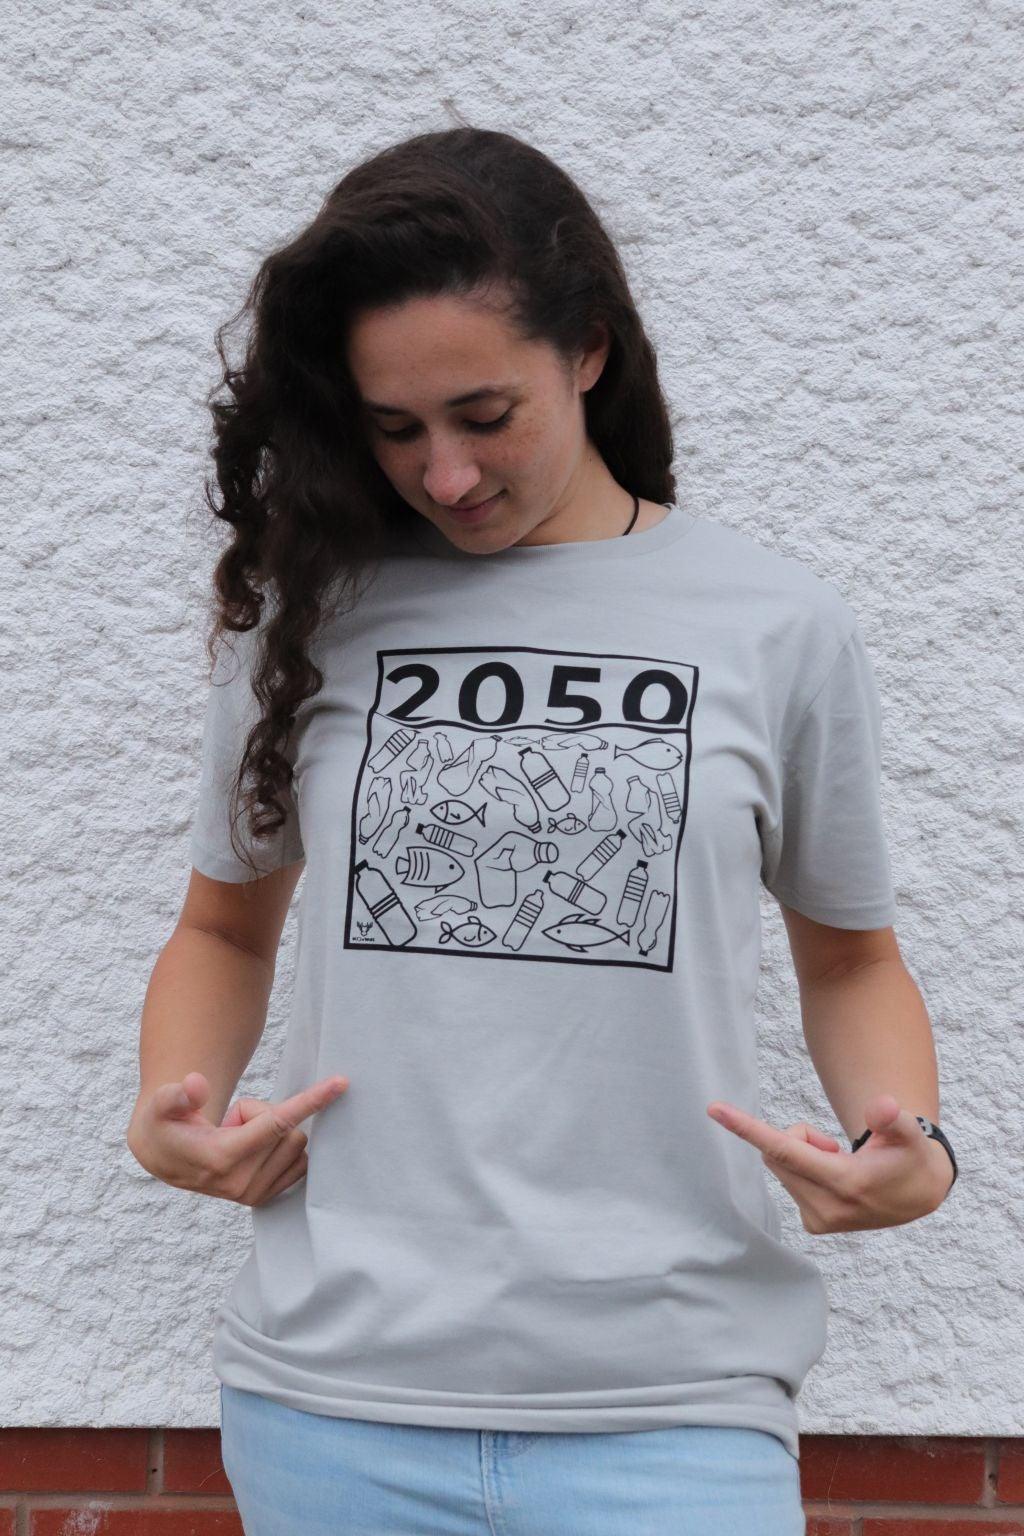 2050 ocean plastic pollution t-shirt - ECO aWARE